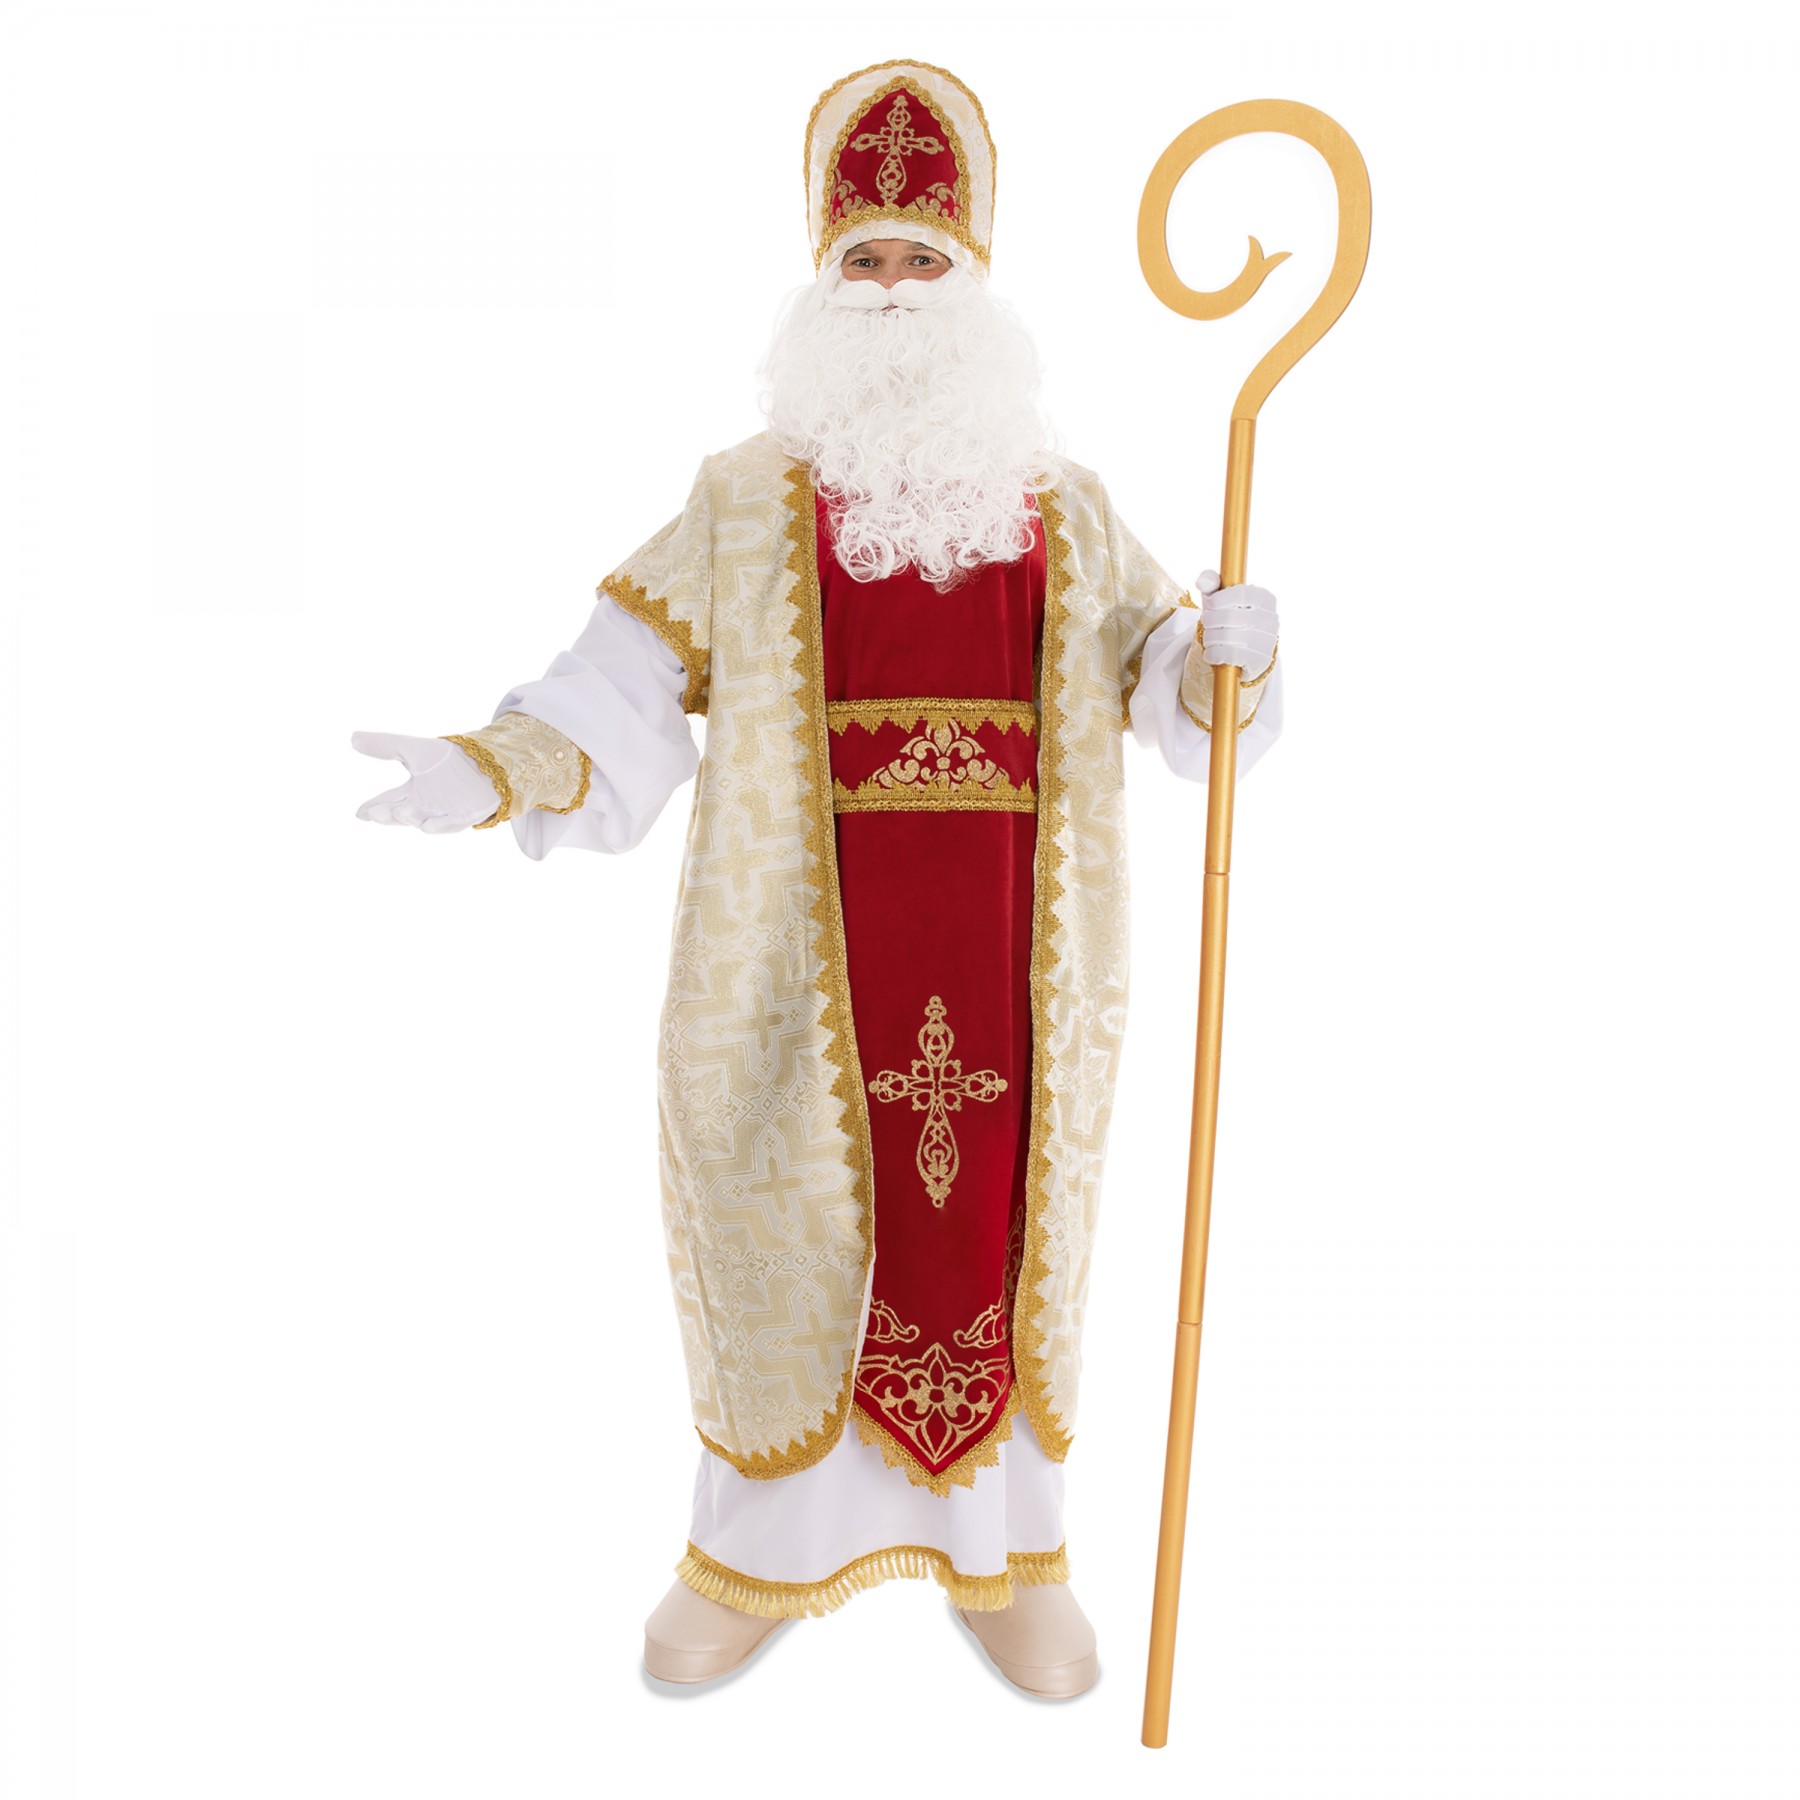 Saint Nicholas costume the Wonderworker